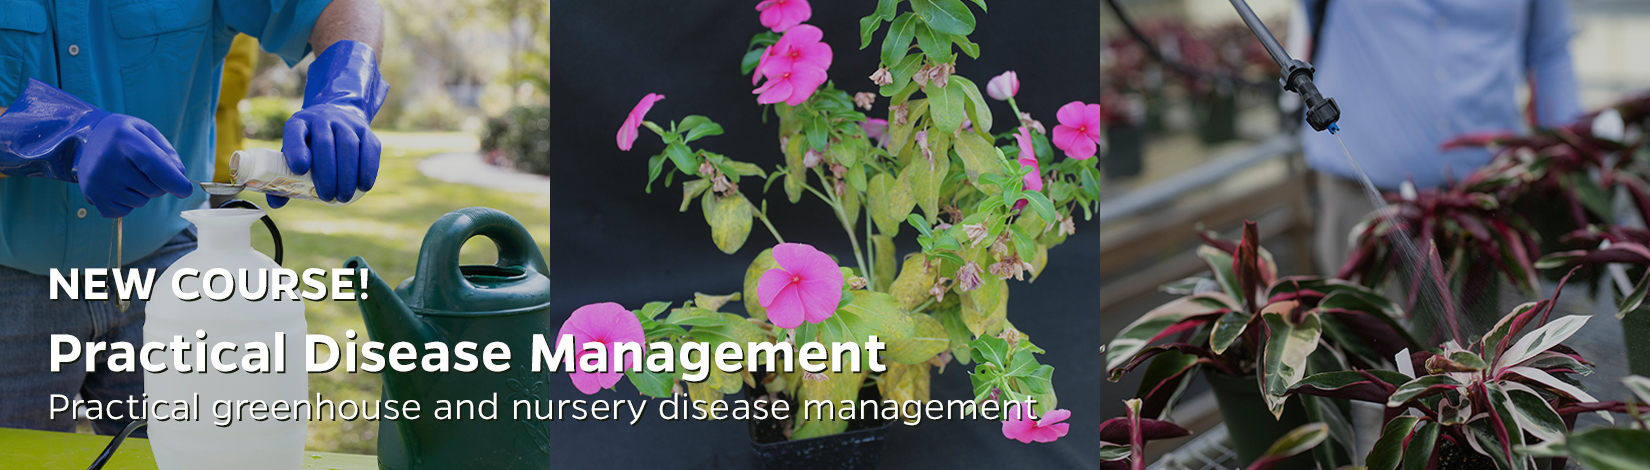 NEW COURSE! Practical Disease Management: Practical greenhouse and nursery disease management